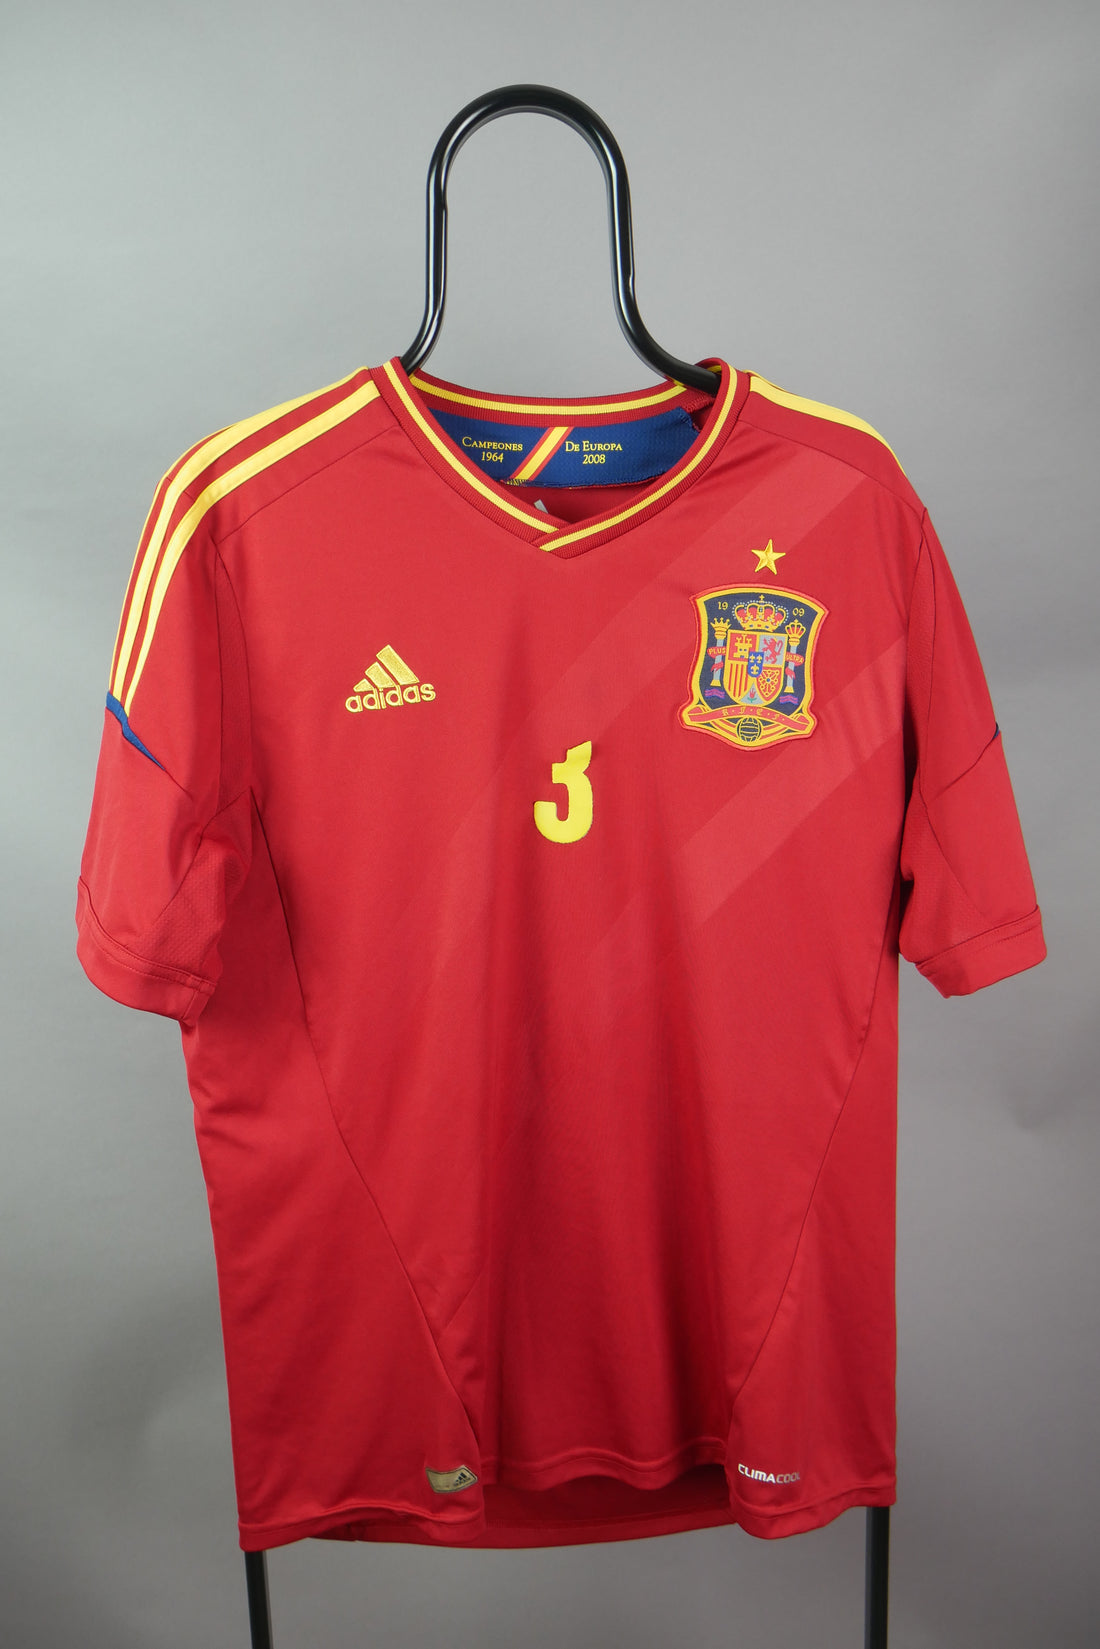 The Adidas Spanish Football Shirt (L)